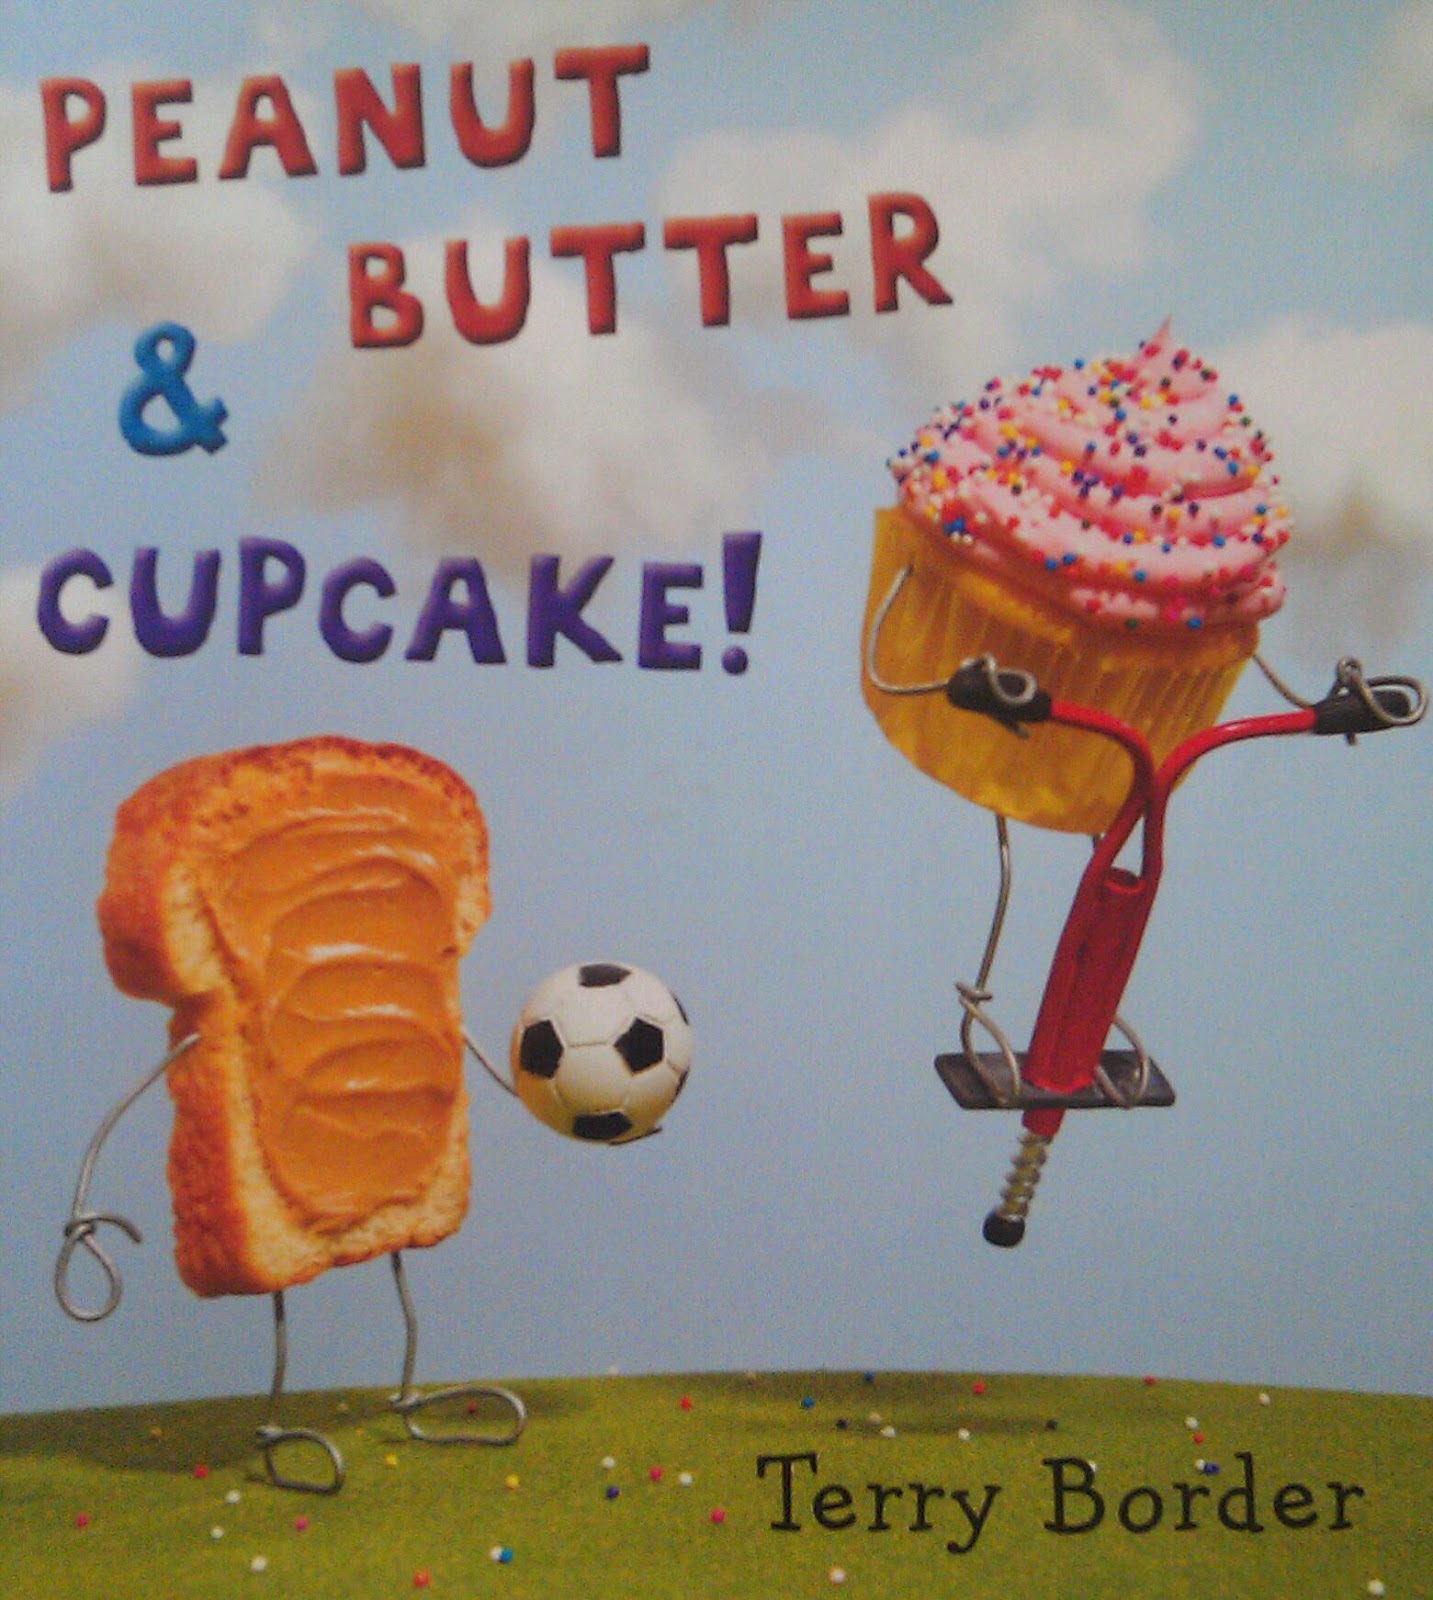 http://www.amazon.com/Peanut-Butter-Cupcake-Terry-Border/dp/0399167730/ref=sr_1_1?ie=UTF8&qid=1413563440&sr=8-1&keywords=peanut+butter+and+cupcake